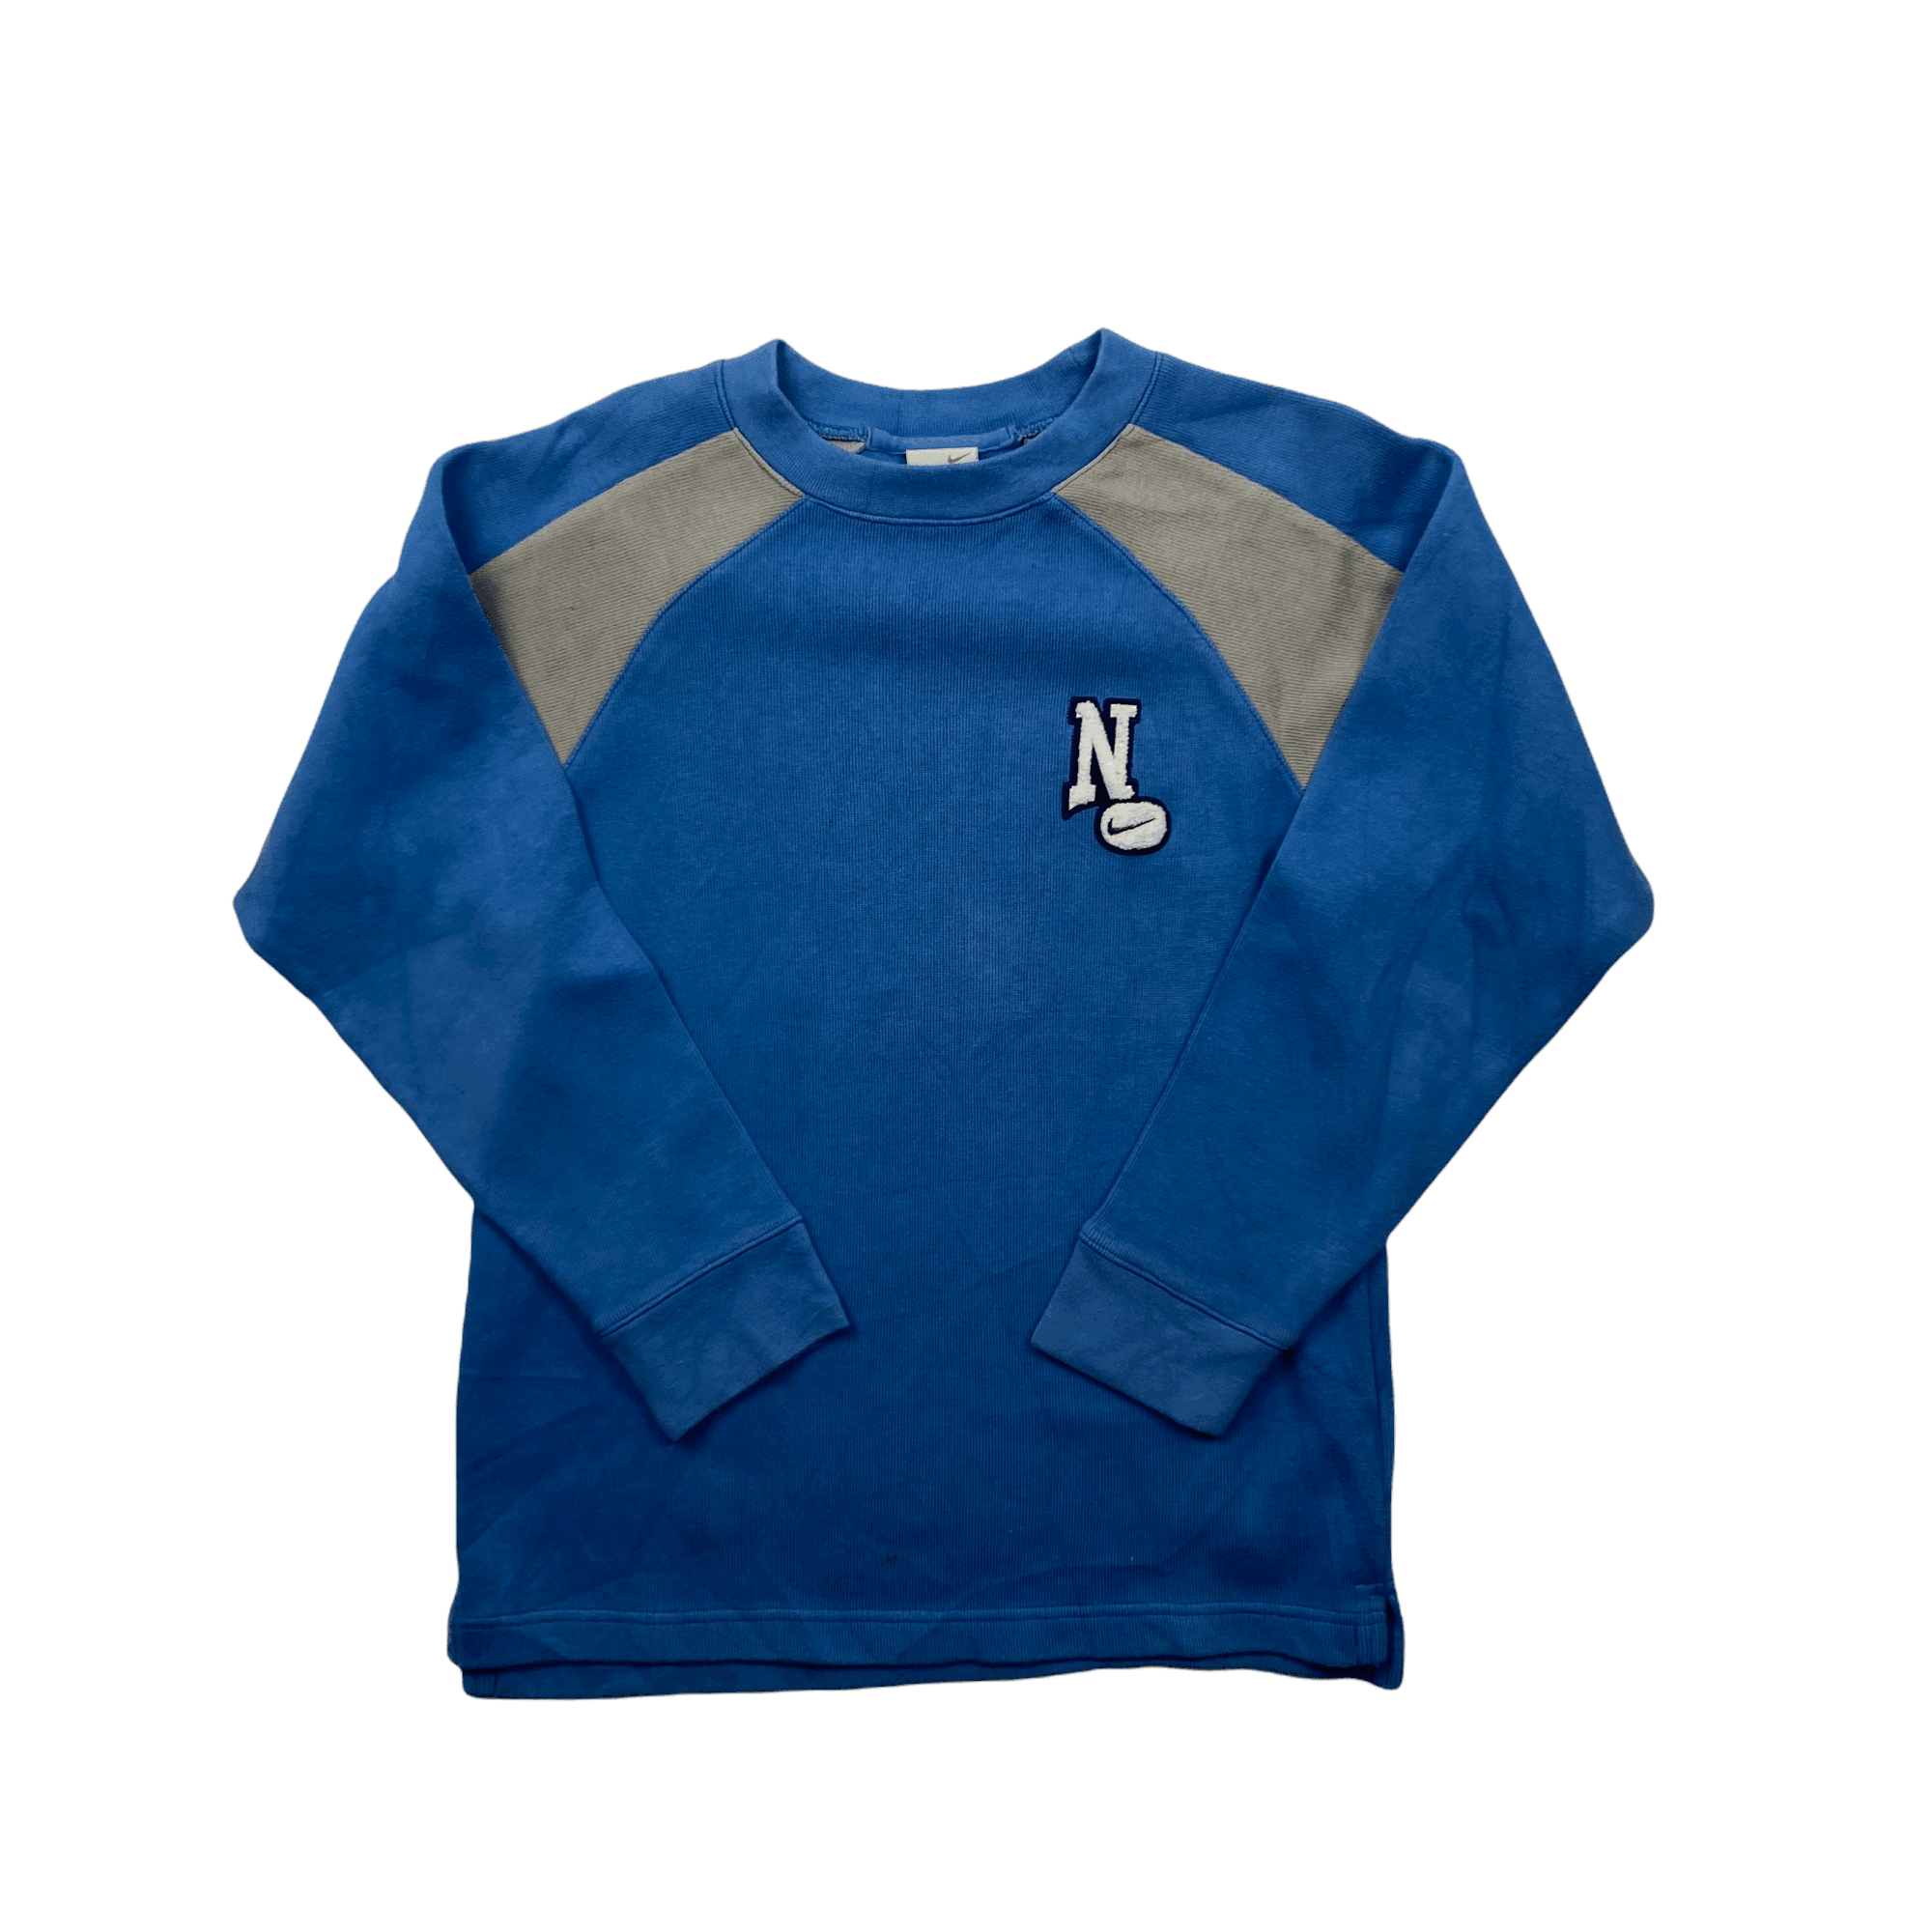 Vintage Women's Baby Blue + Grey Nike Sweatshirt - Large - The Streetwear Studio